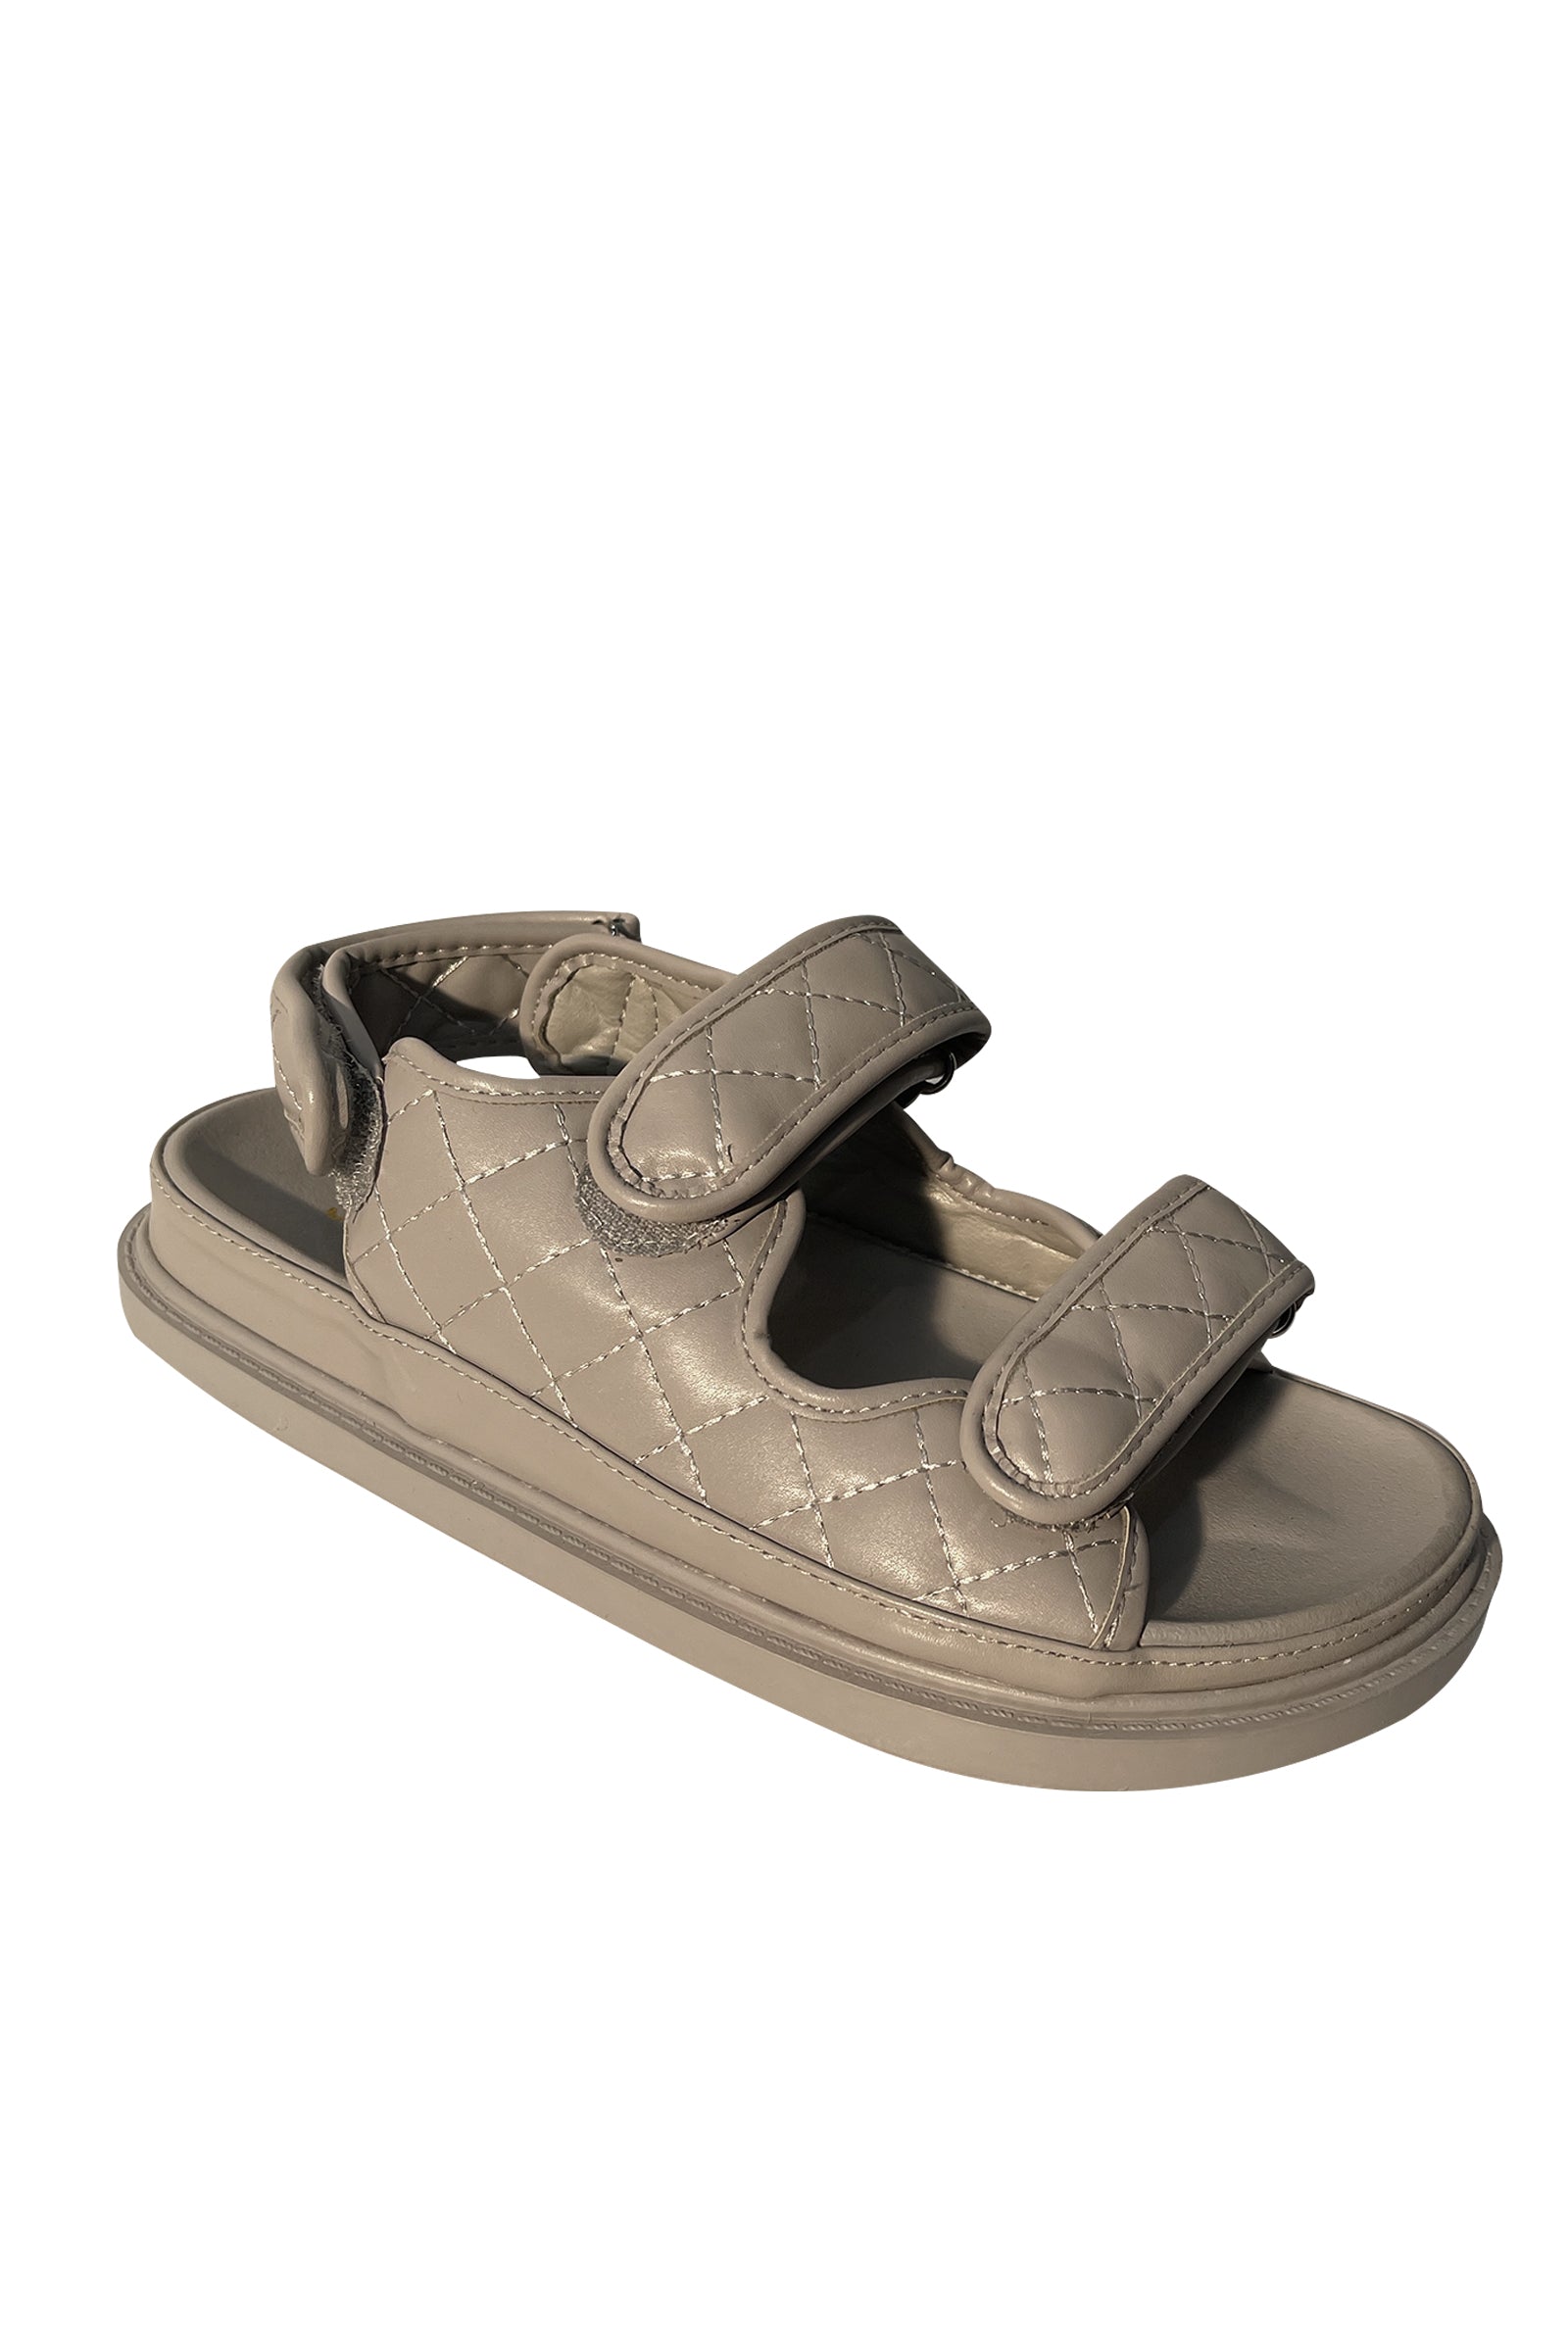 Dad Sandals - Shop on Pinterest